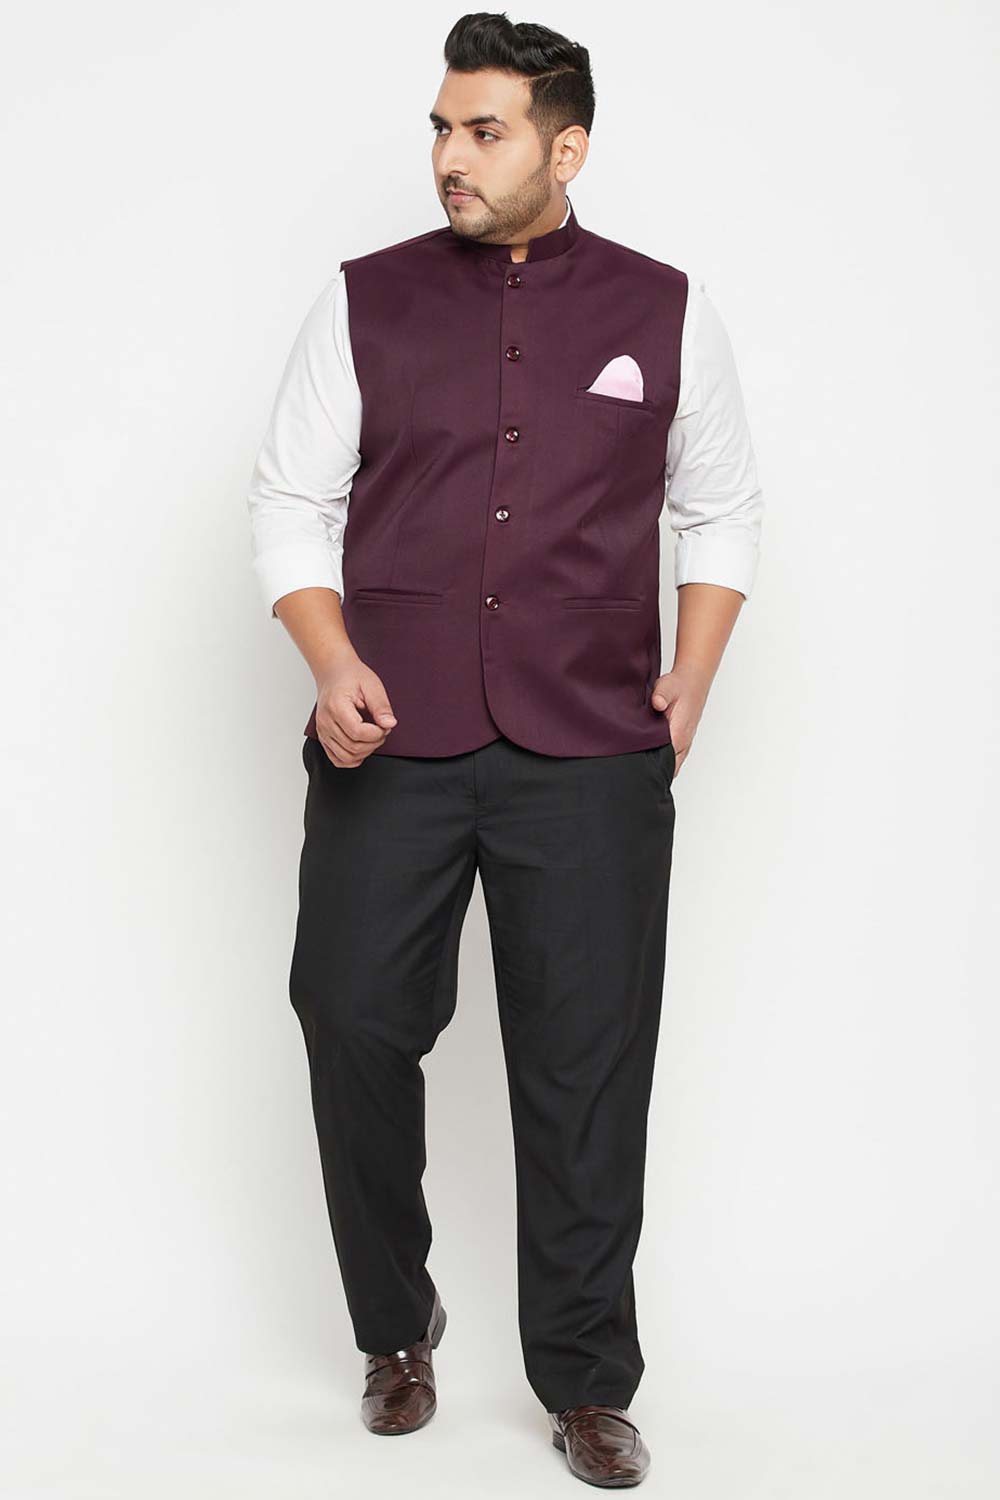 Buy Men's Cotton Silk Blend Solid Nehru Jacket in Maroon - Zoom Out